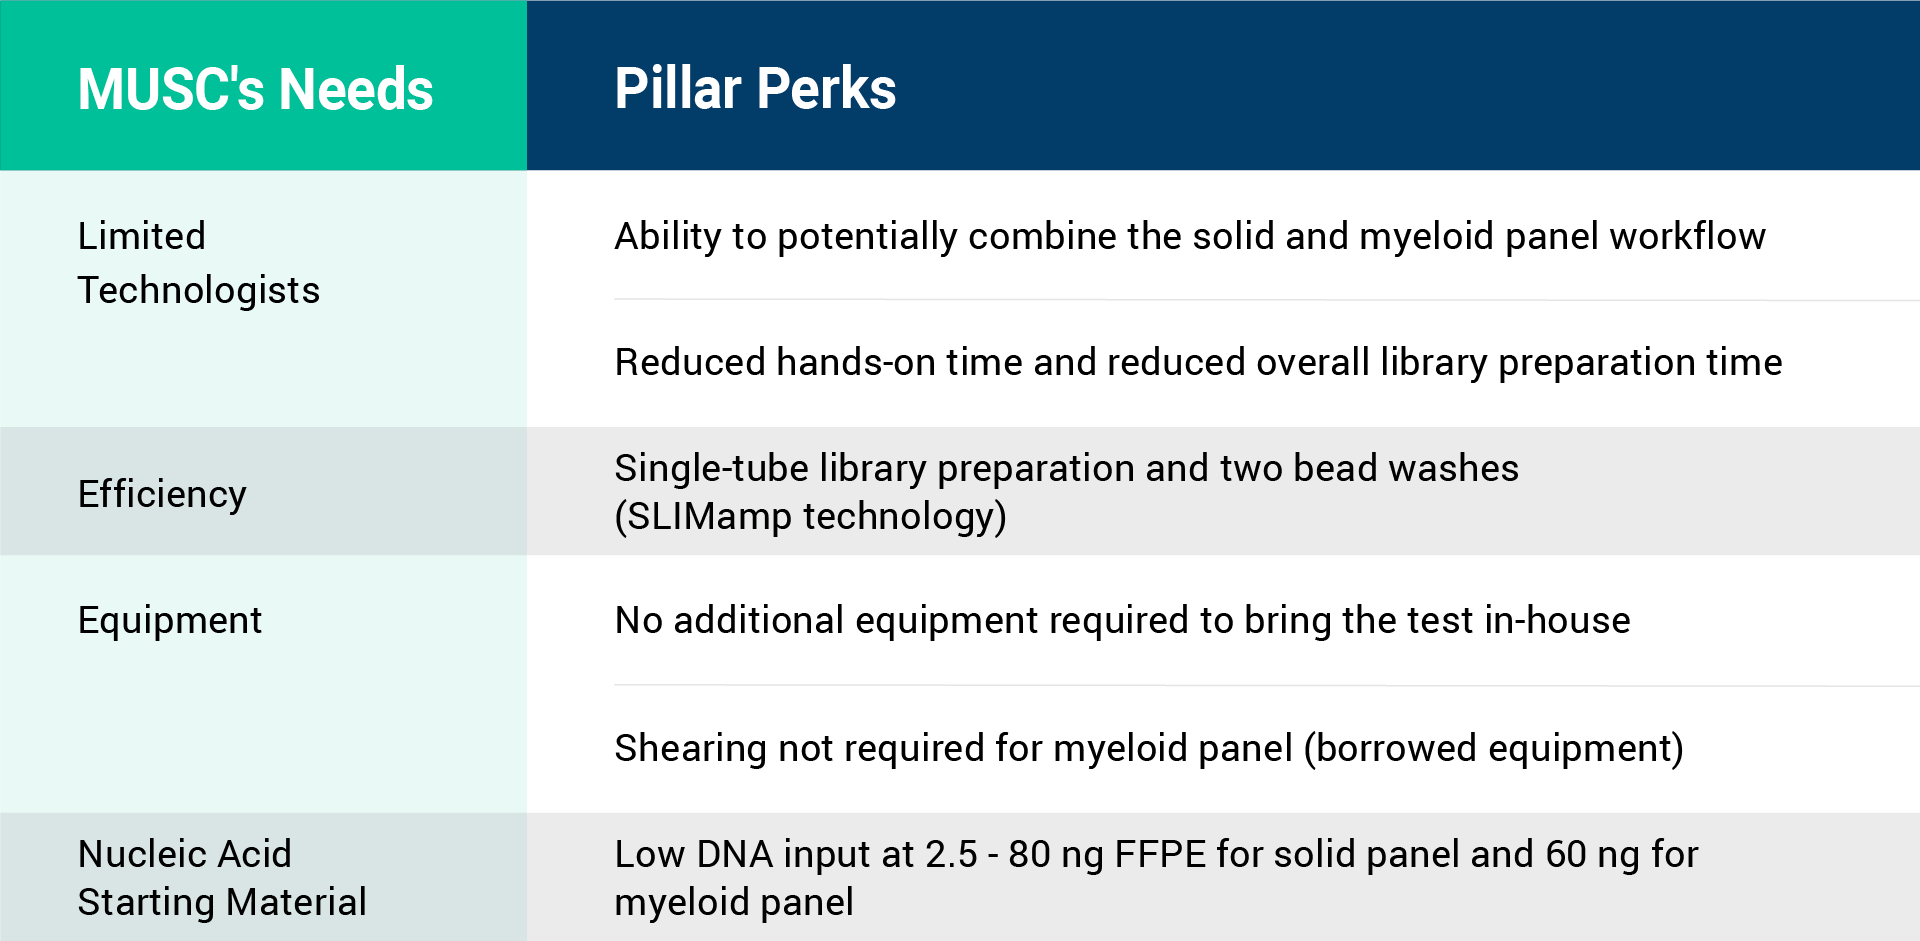 Pillar has unique perks that match MUSC's needs